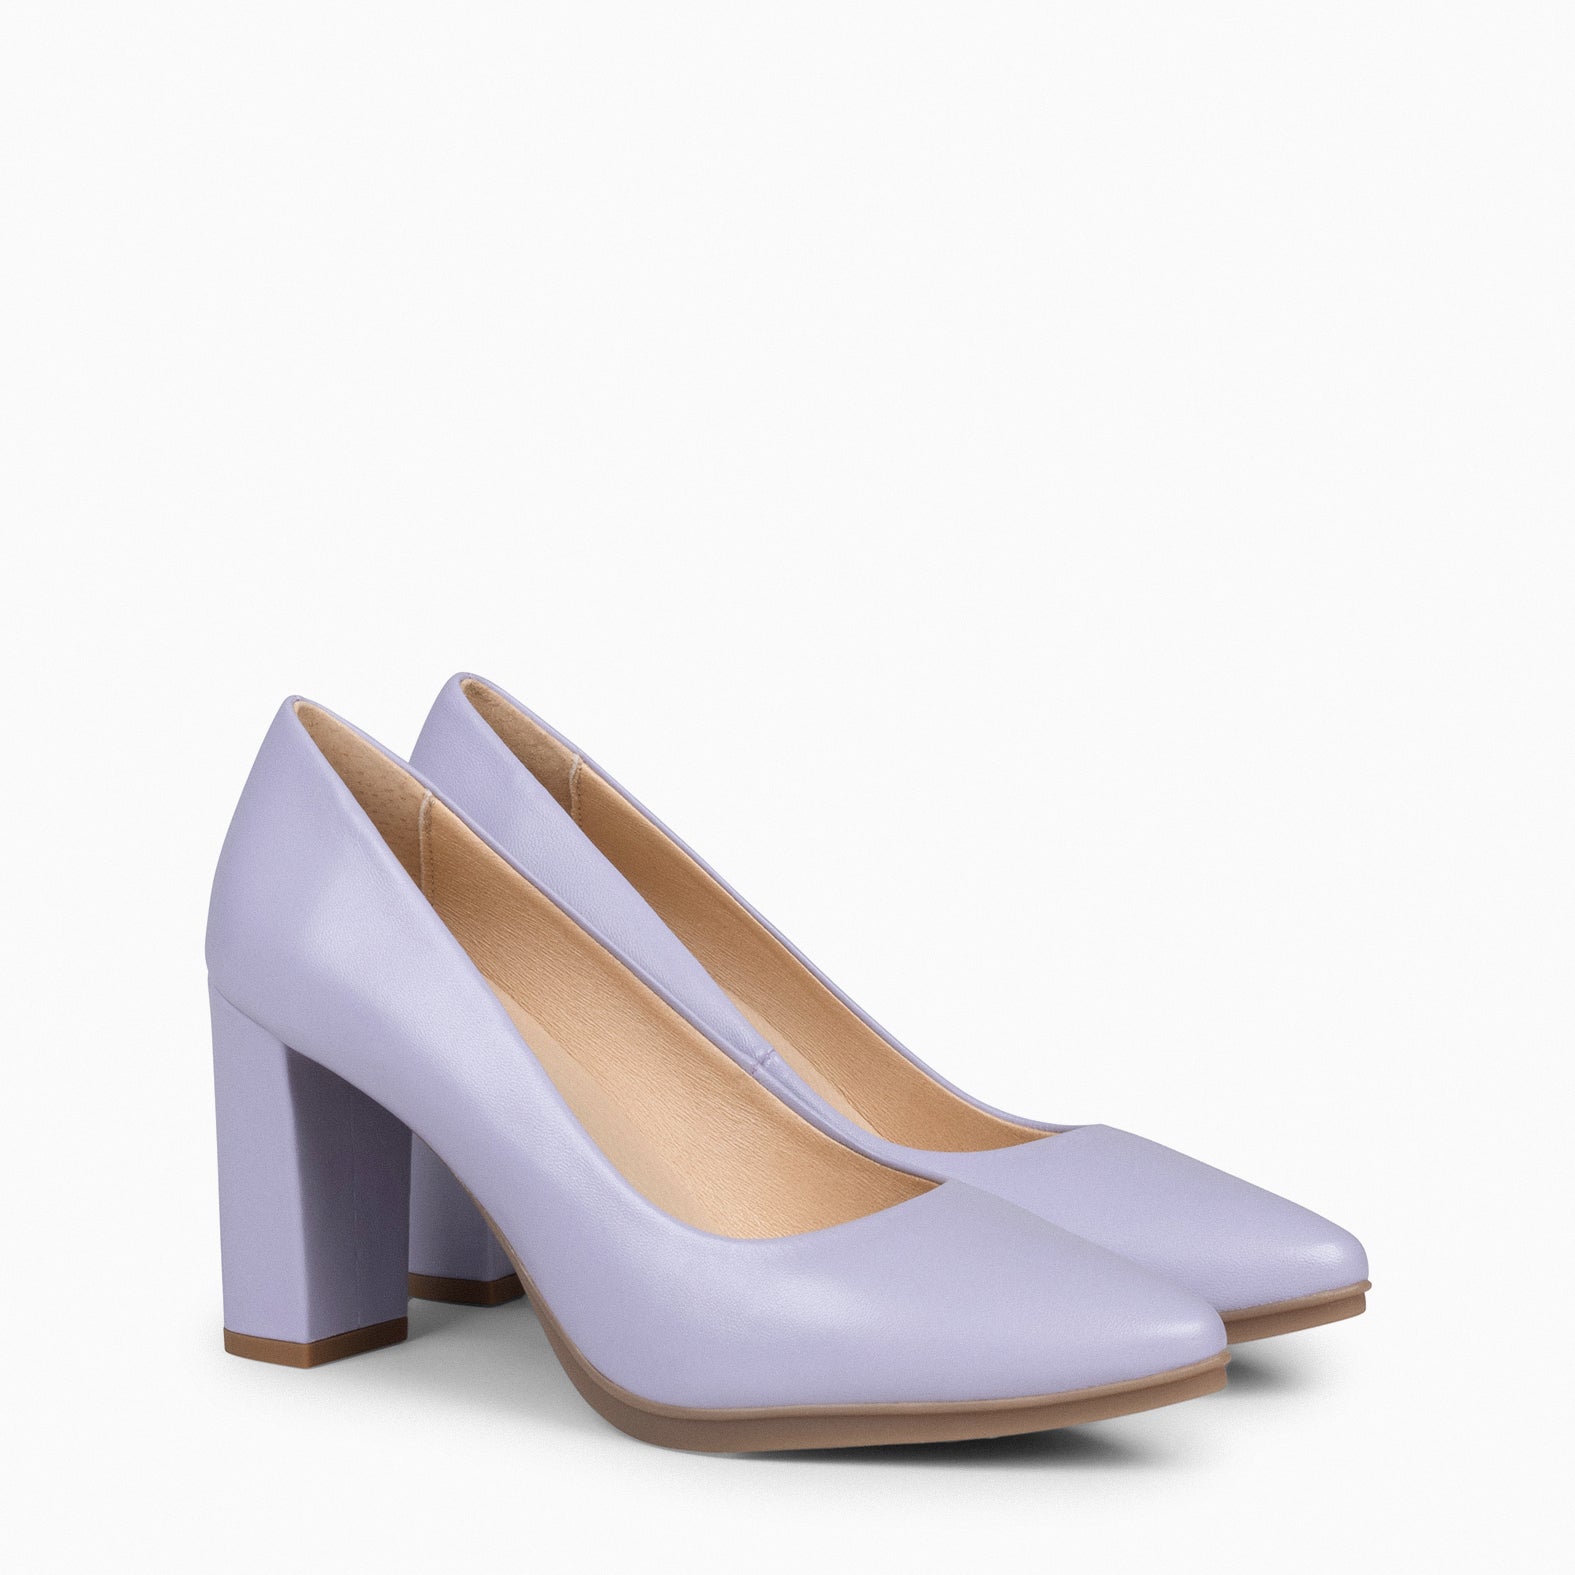 URBAN SALON – LILAC nappa leather high heel